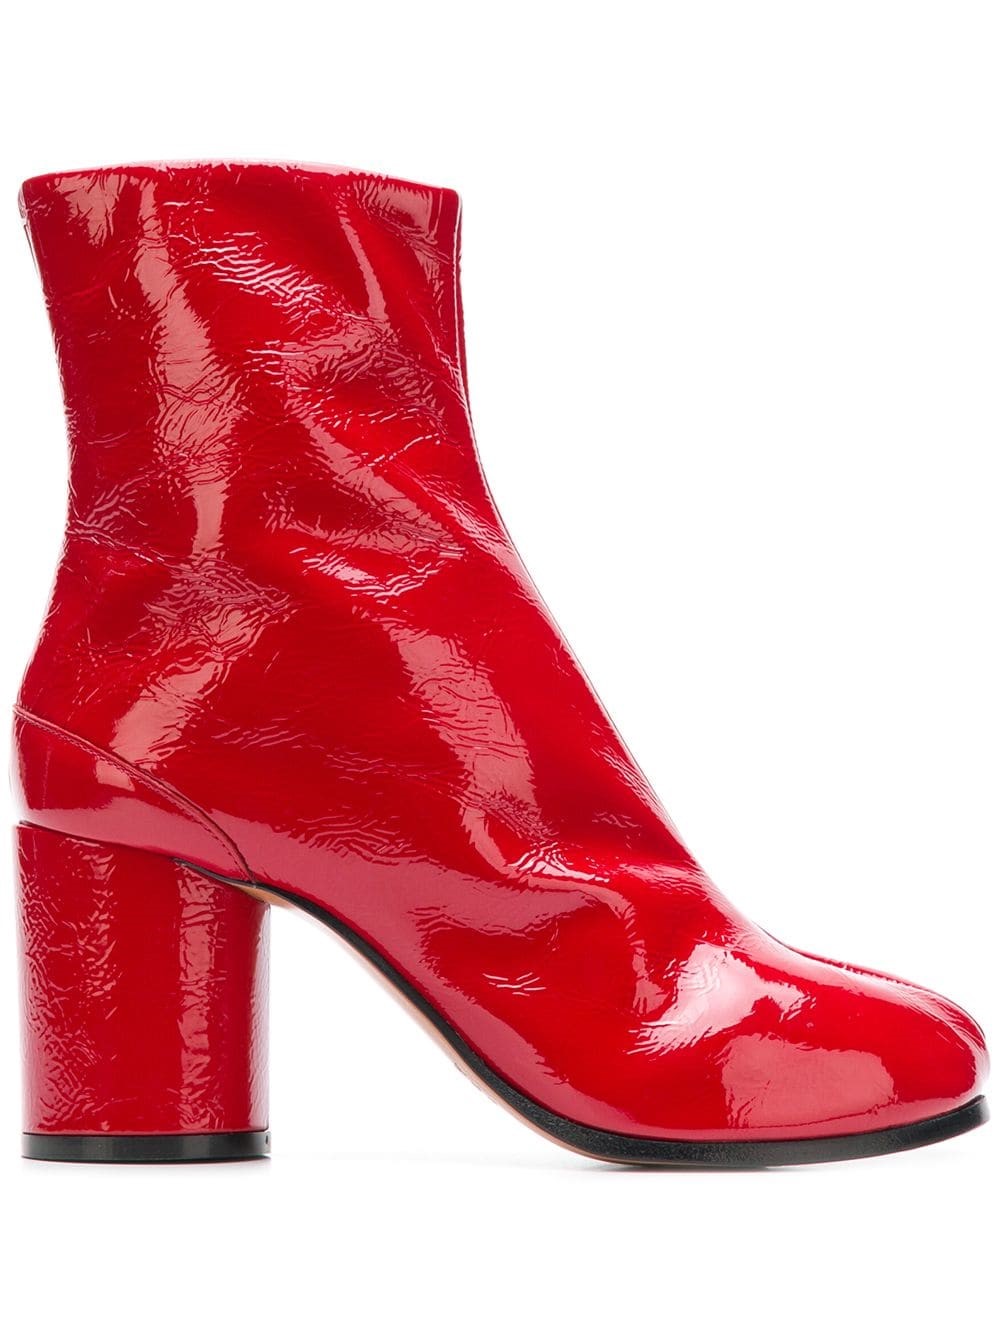 margiela tabi boots red